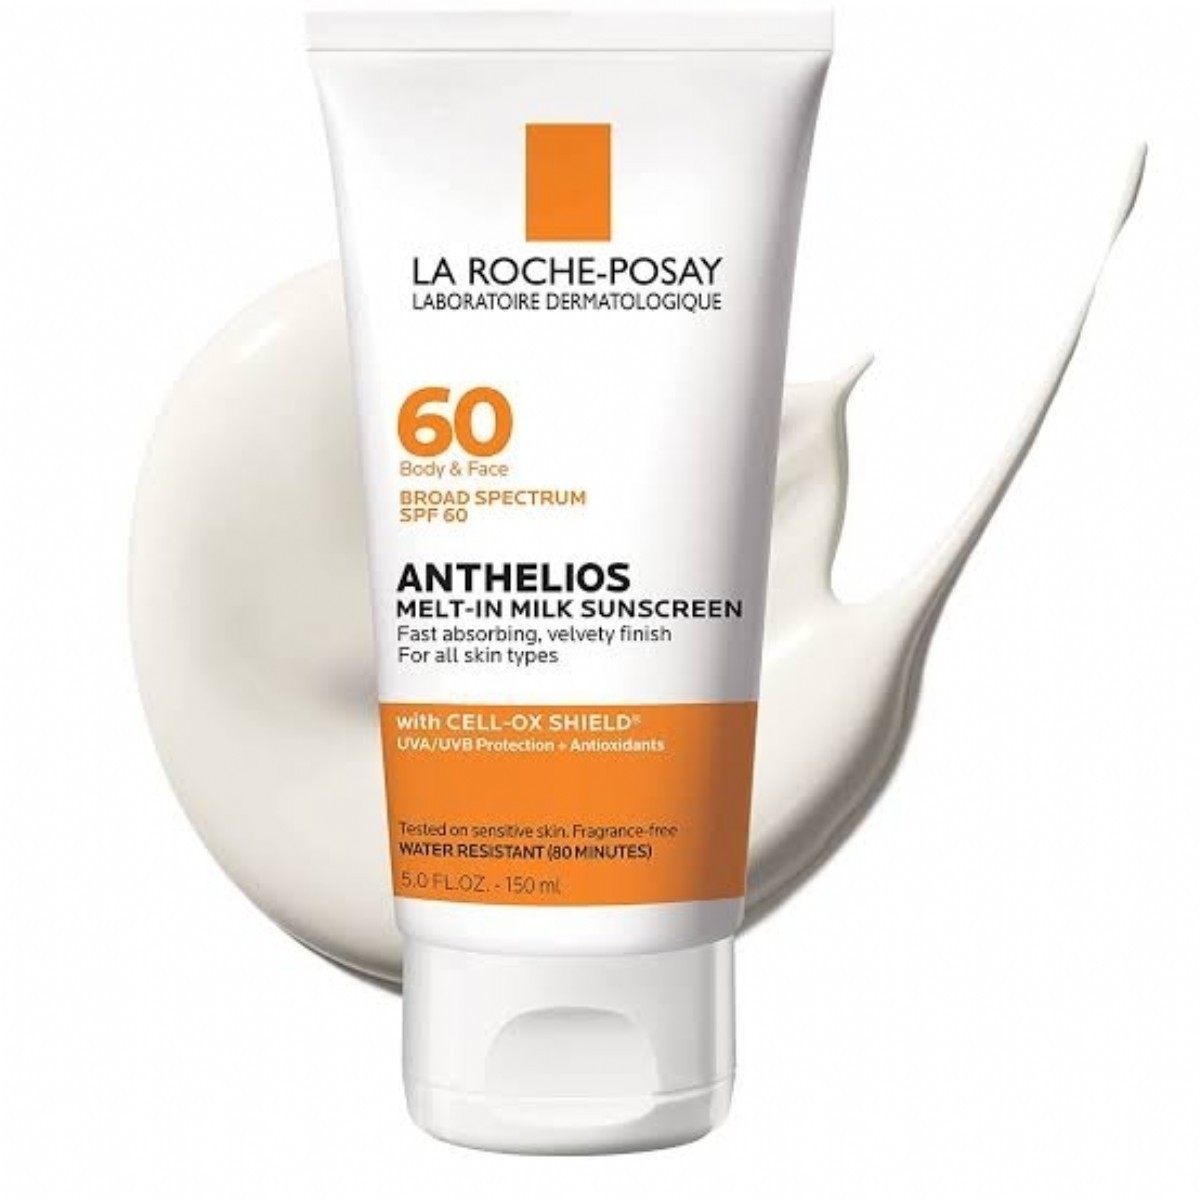 CİLT BAKIM | La Roche-Posay Anthelios Melt-In Sunscreen Milk SPF 60 Güneş Kremi 150 ml | LRP04 | Güneş kremi la Roche Posay  | 